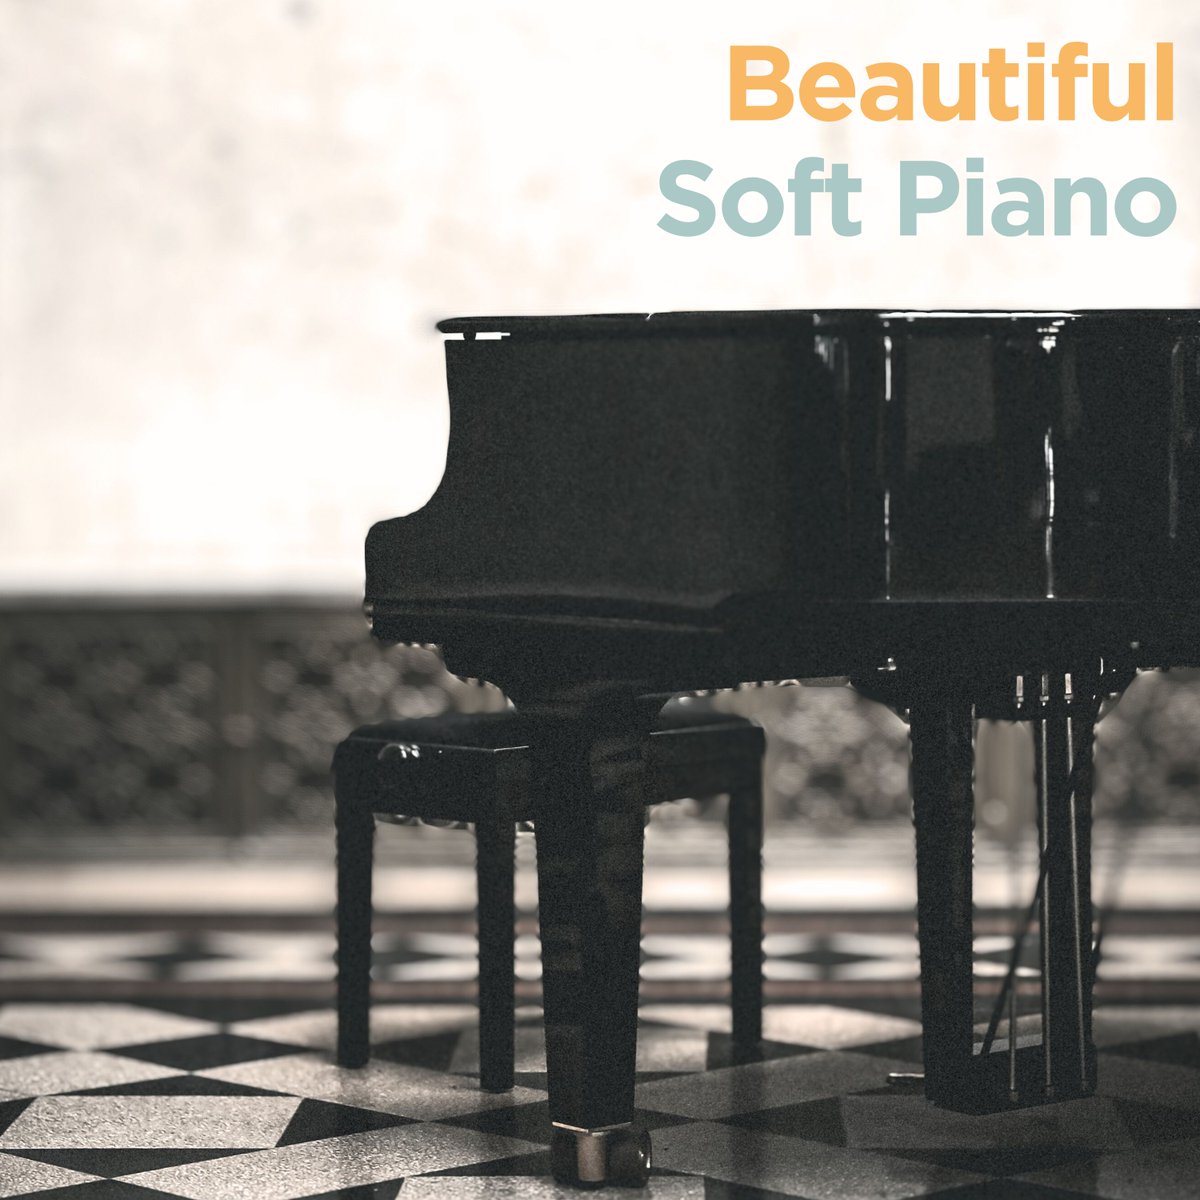 Added in #Beautiful #Soft #Piano #Playlist 🎹💎
@SonyowHwans
@alvikmusic
@BrownMusicscool
@LynnTredeau
@RosiBoti
@TheAudioWaves
@jadeashtangini
@riccardopietri

@Spotify
open.spotify.com/playlist/72F7A…

@pandoraAMP
pandora.app.link/WkzYoHa5yGb

#classical #MuseBoost #RFBoost @ArtistRTweeters